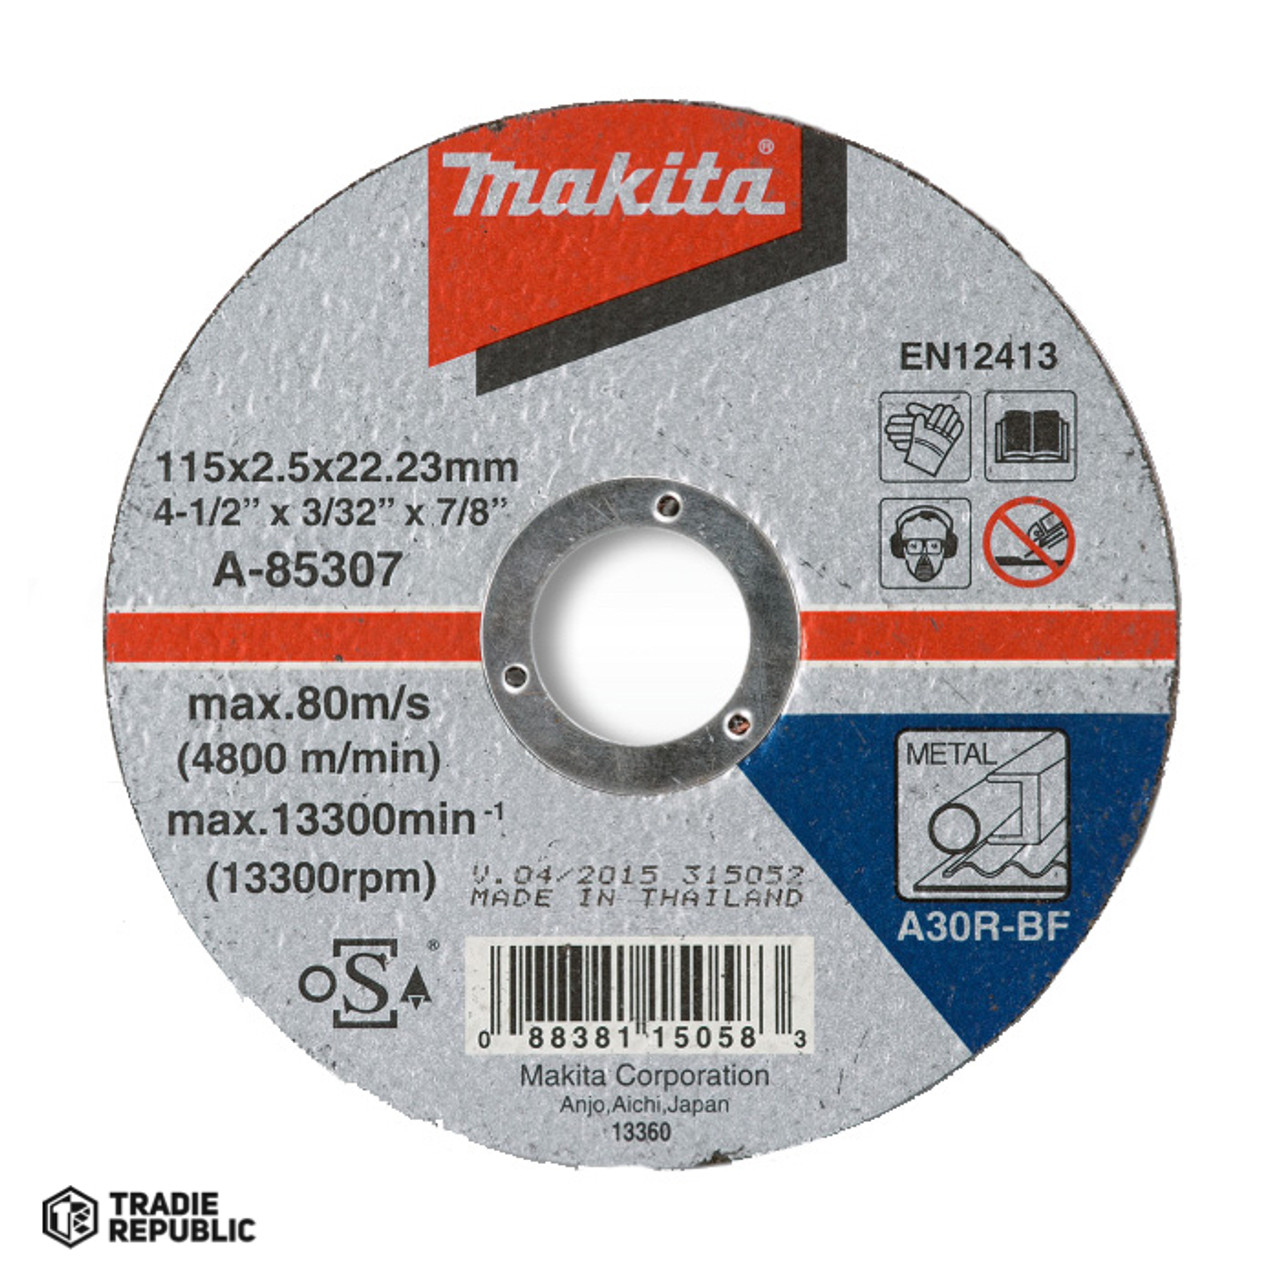 D-20454-10 Makita 10PCS CUT-OFF Wheel 230x2.5mm